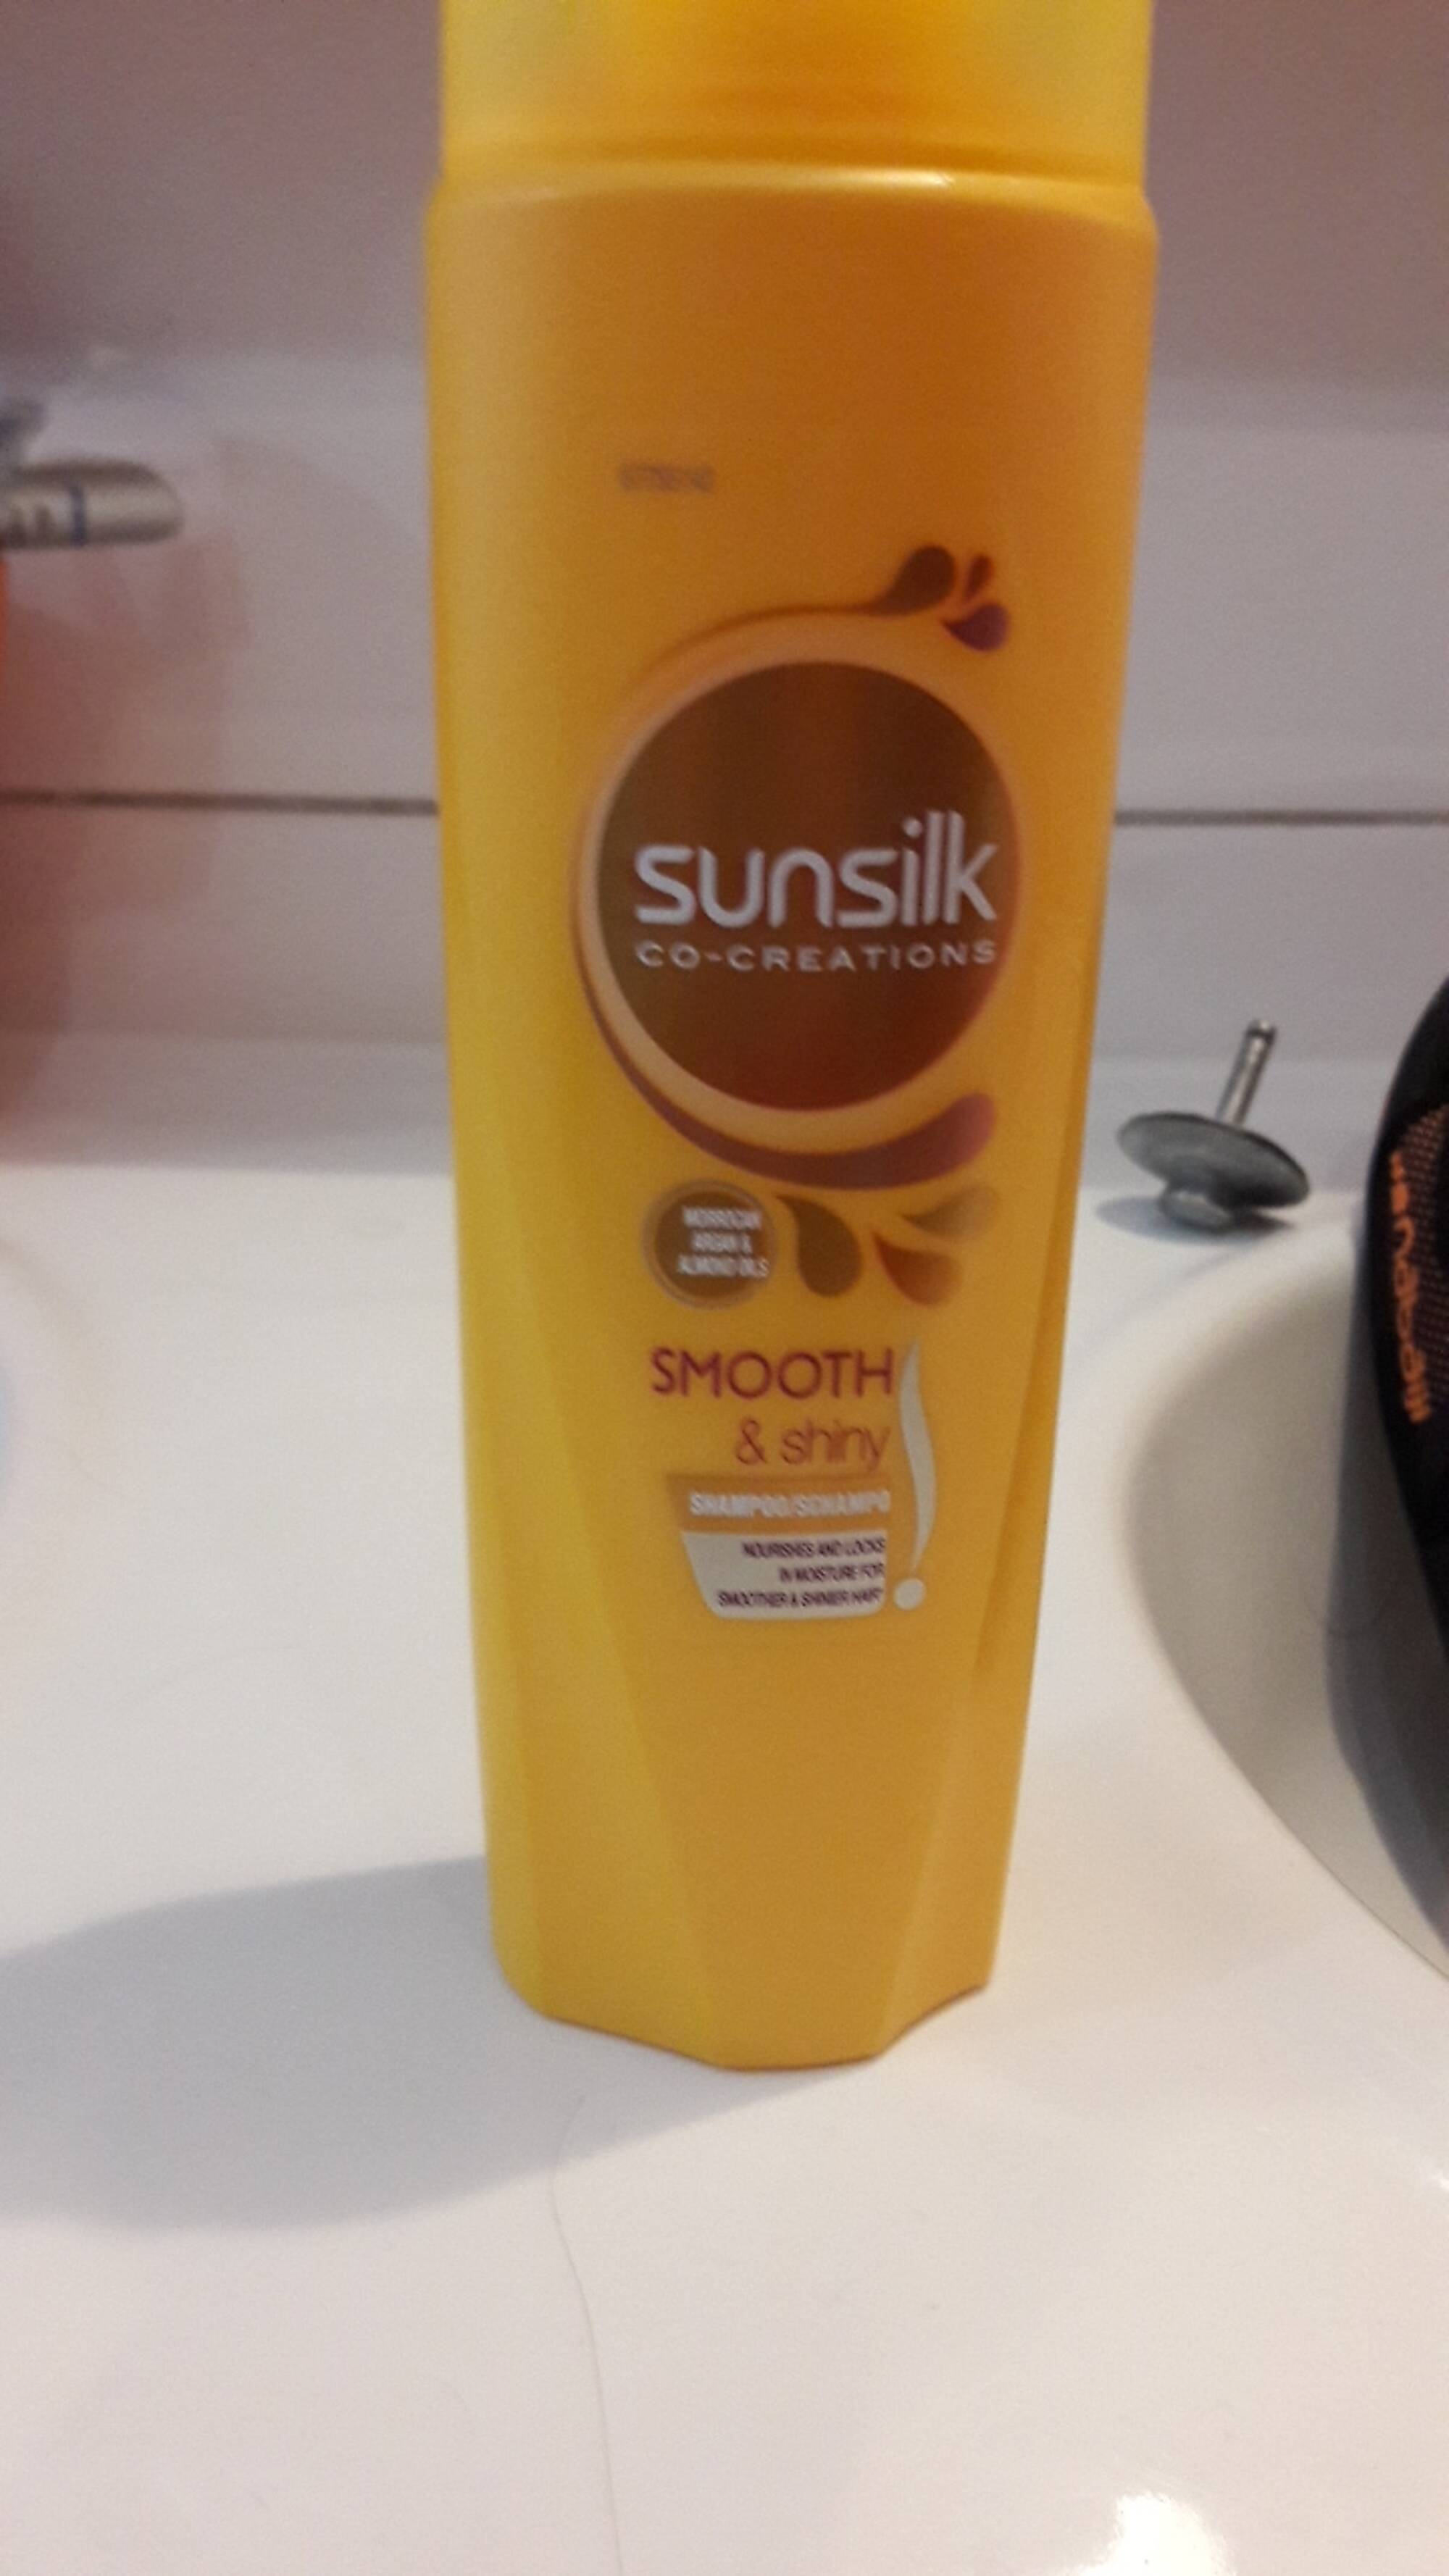 SUNSILK - Smooth & shiny - Shampoo